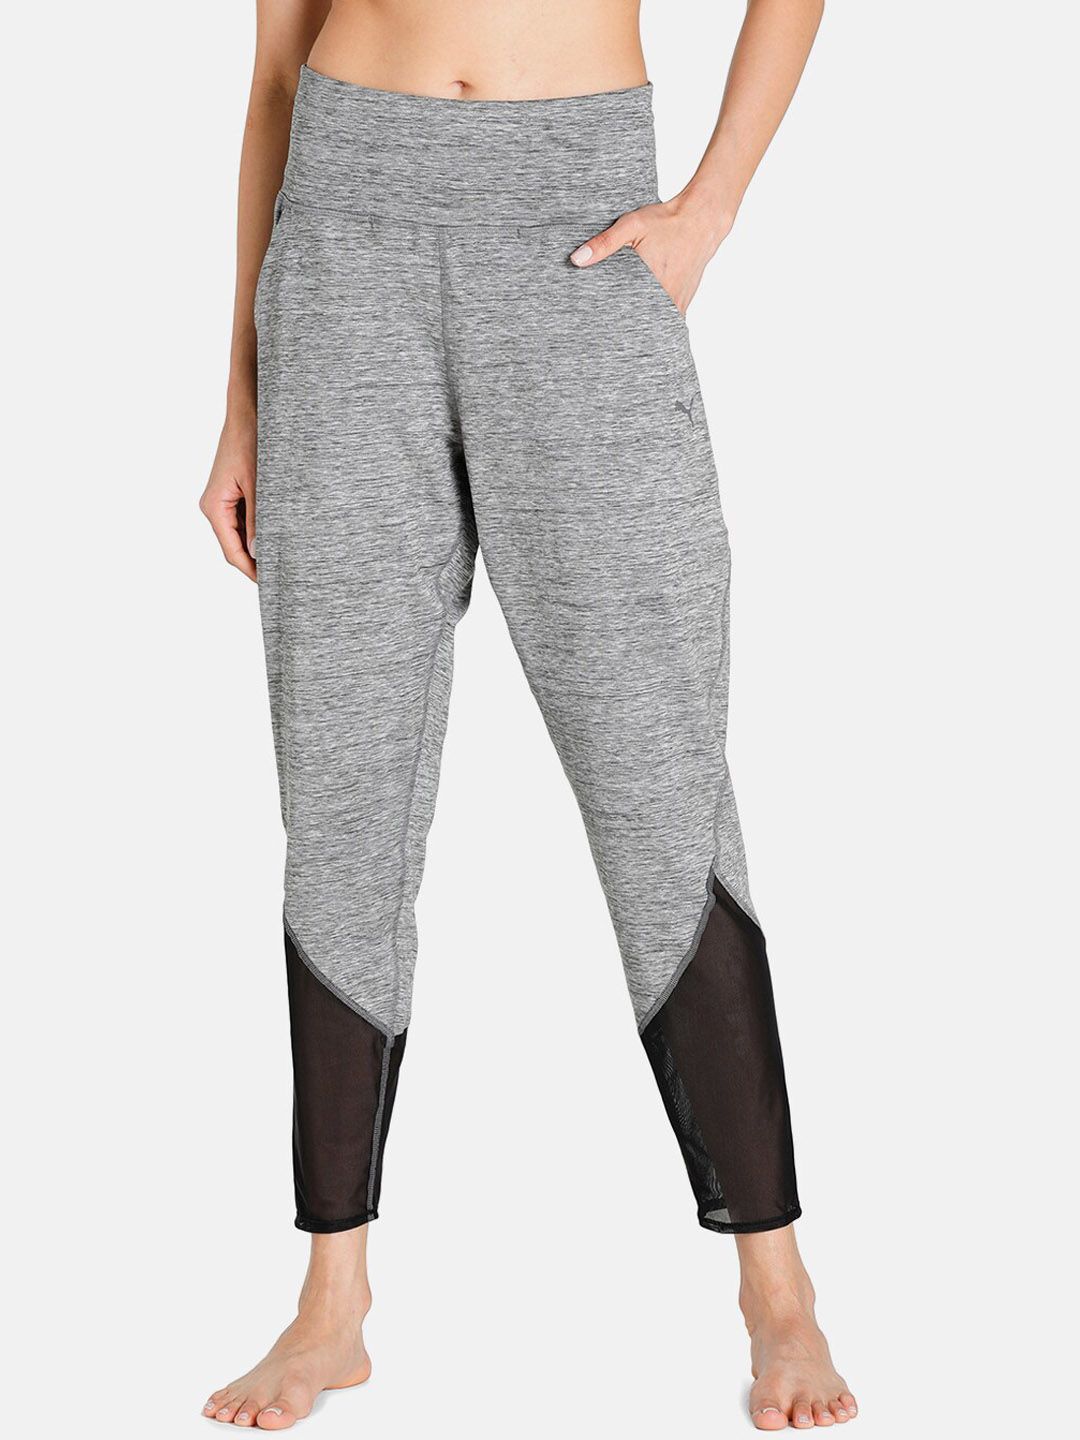 Puma Women Grey & Black Colourblocked Yoga Track Pants Price in India